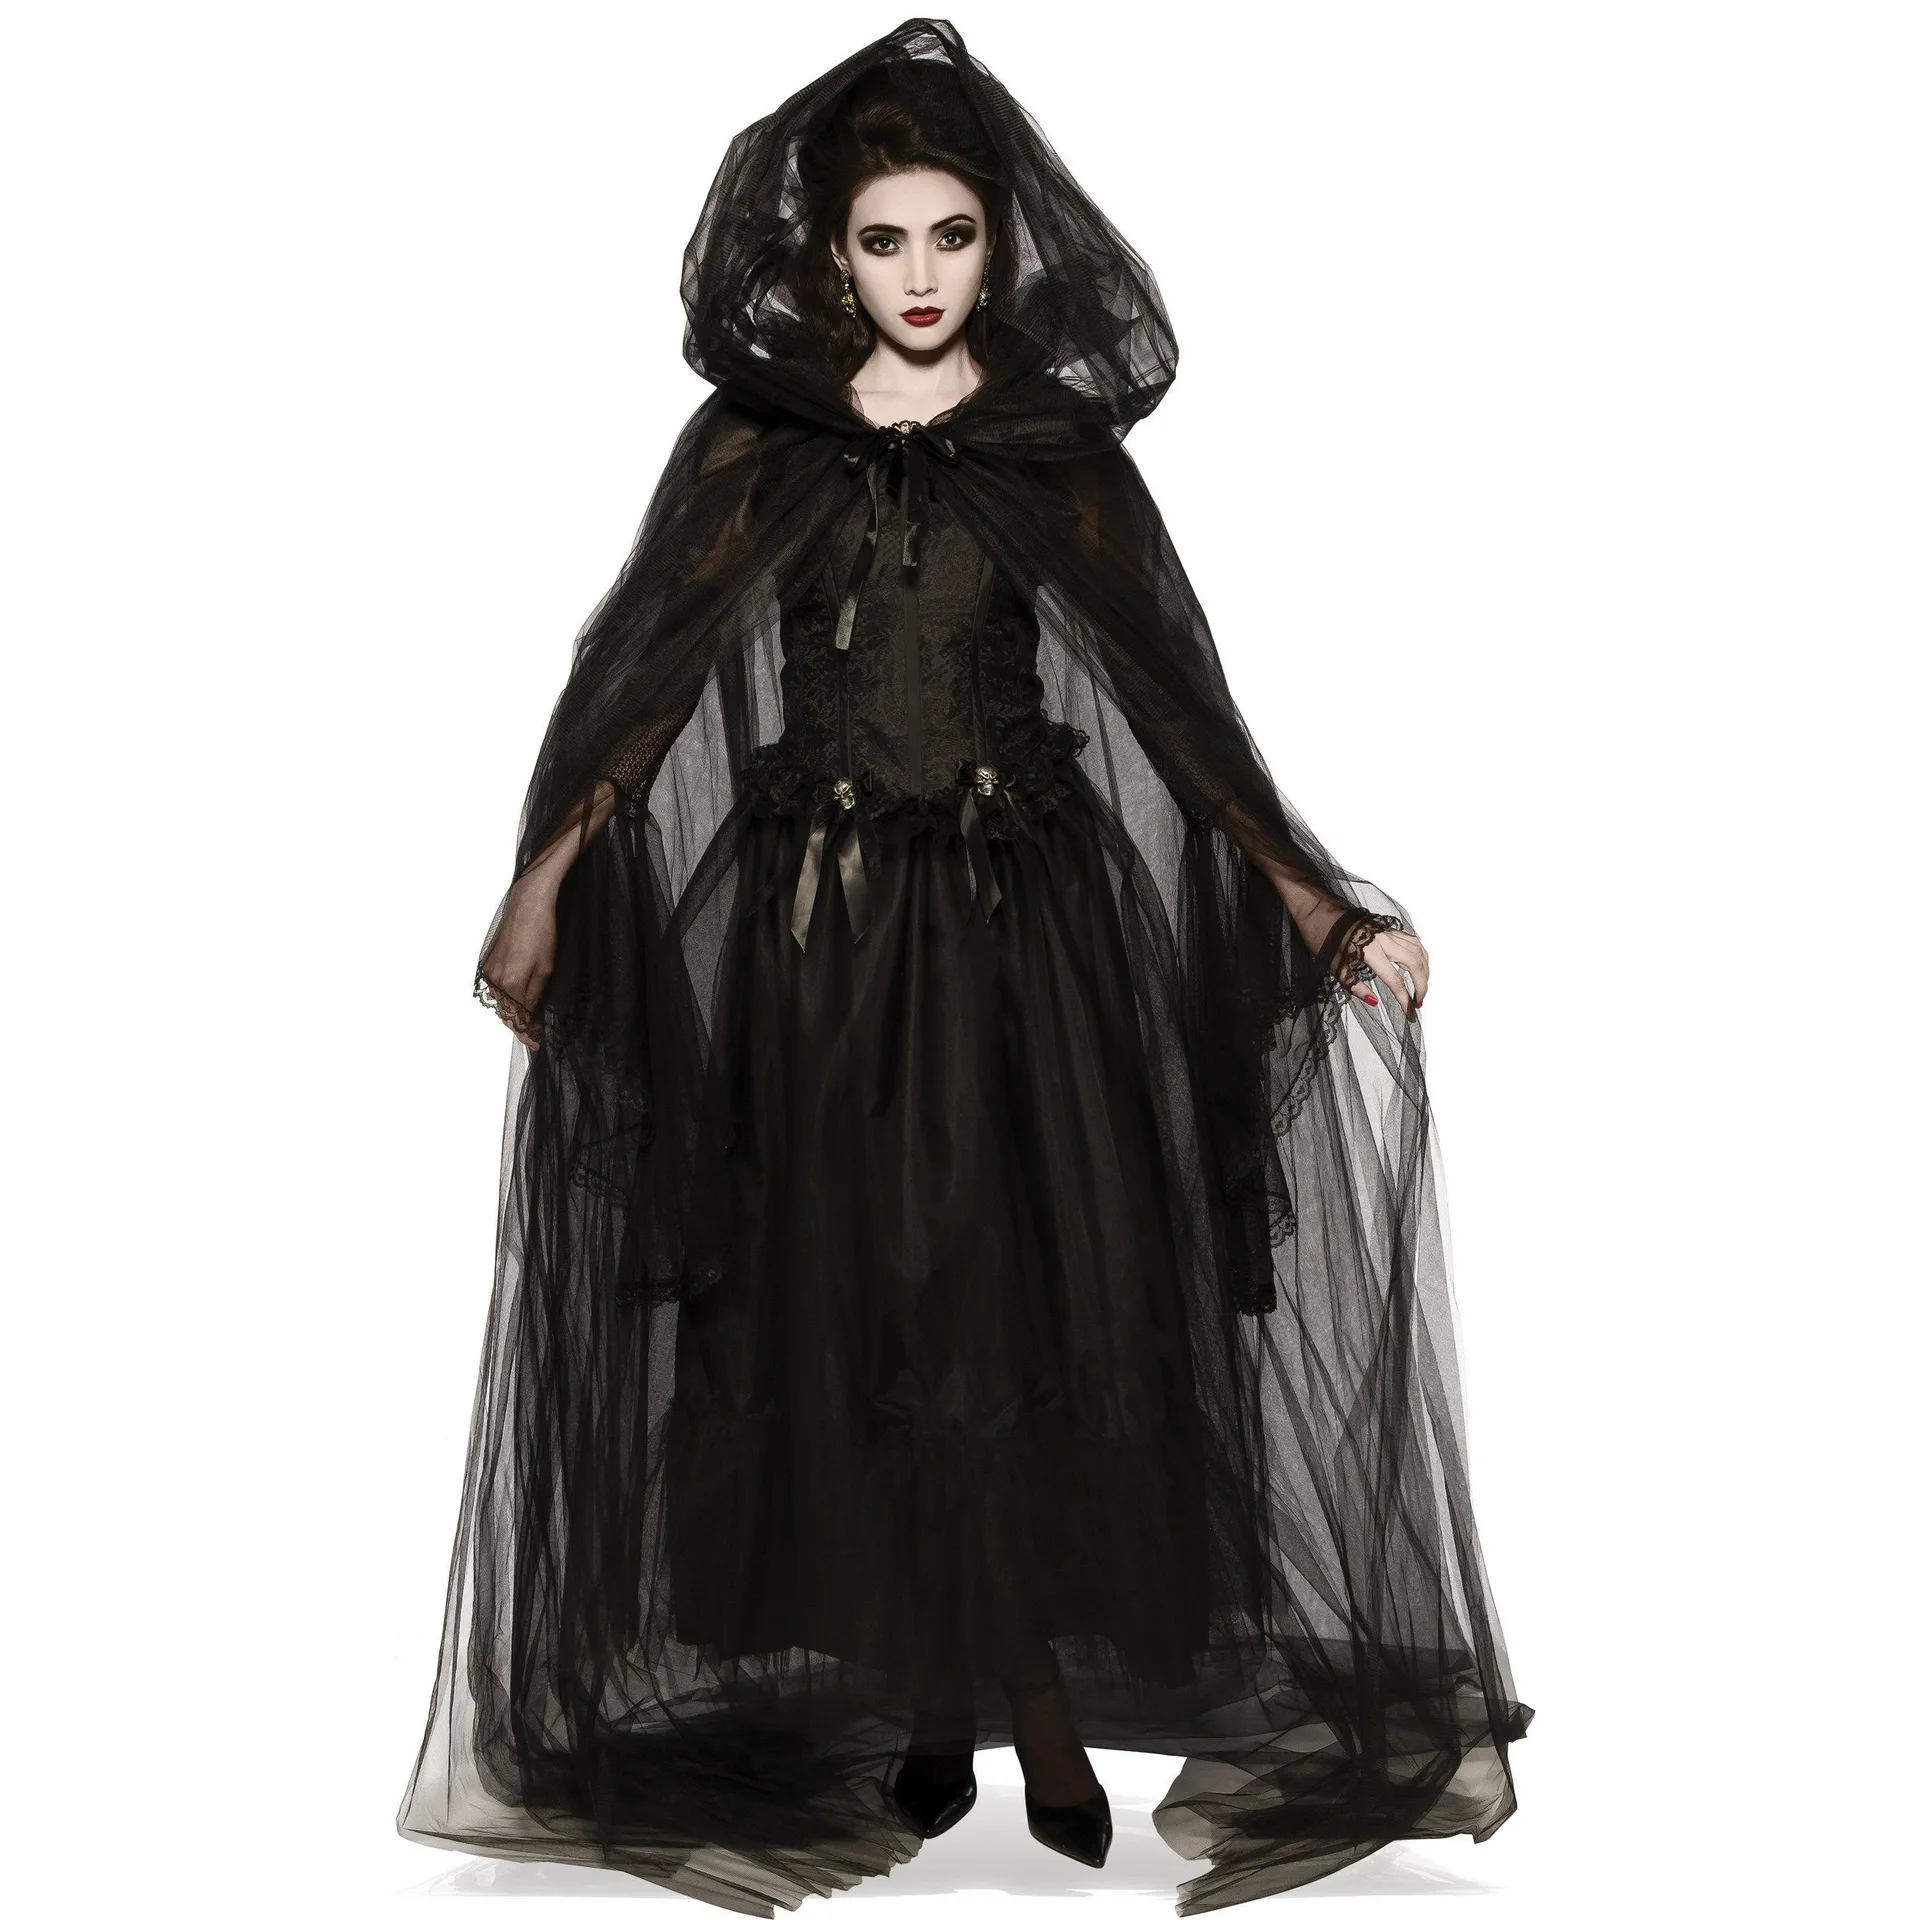 Code Halloween Death Hell Goddess Witch Demon Vampire Uniform Dress Black Dress Dance Party halloween costumes for women